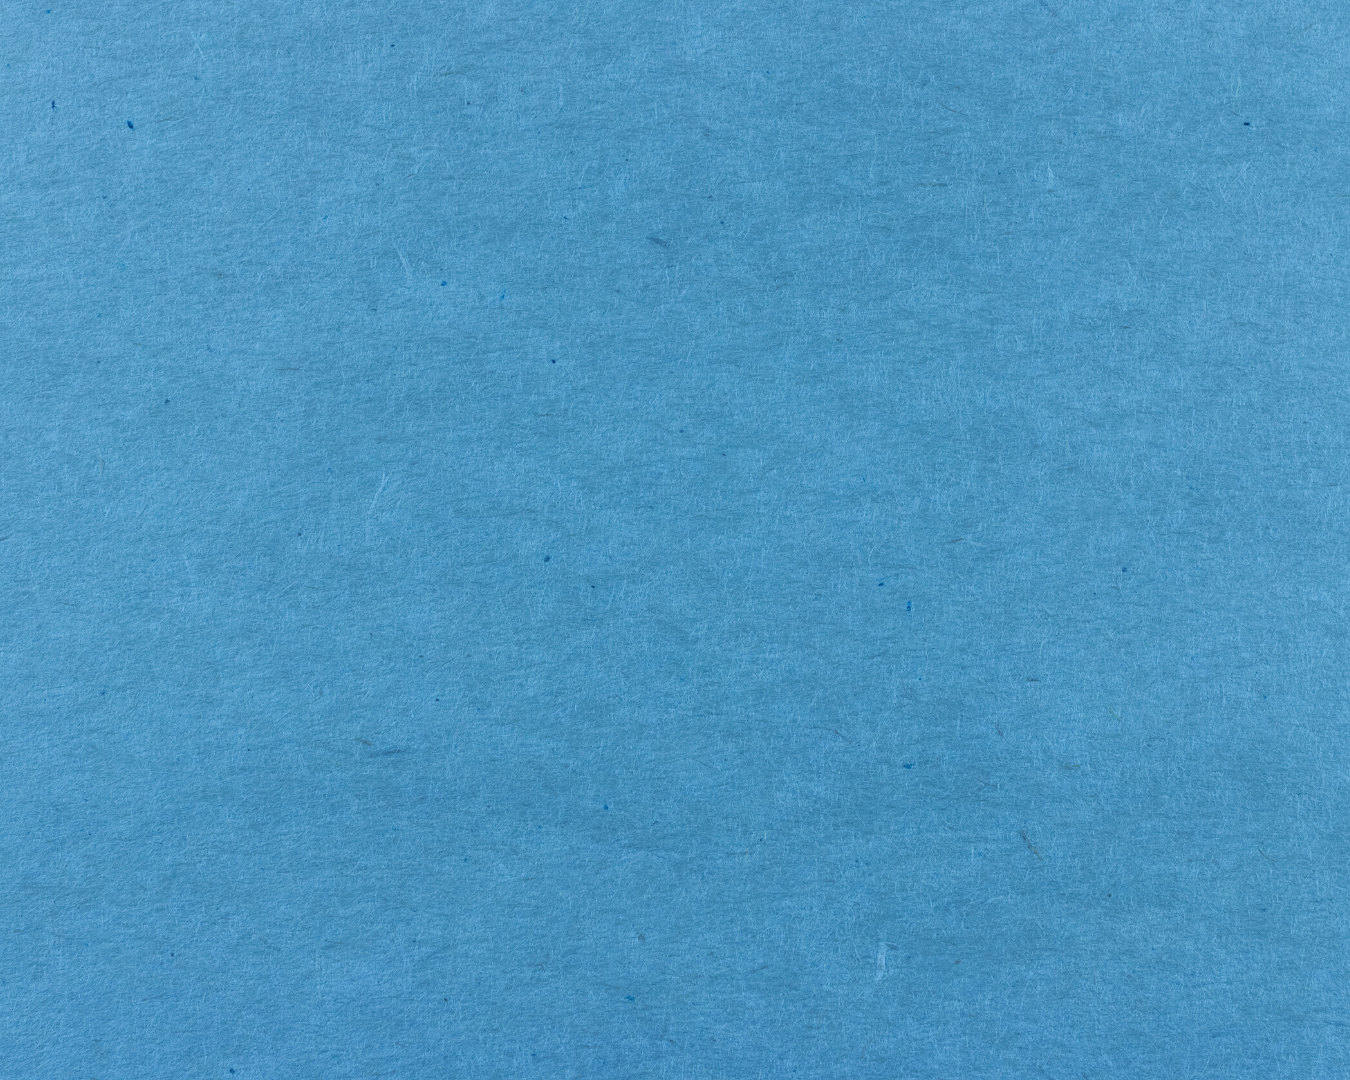 Blue textured paper